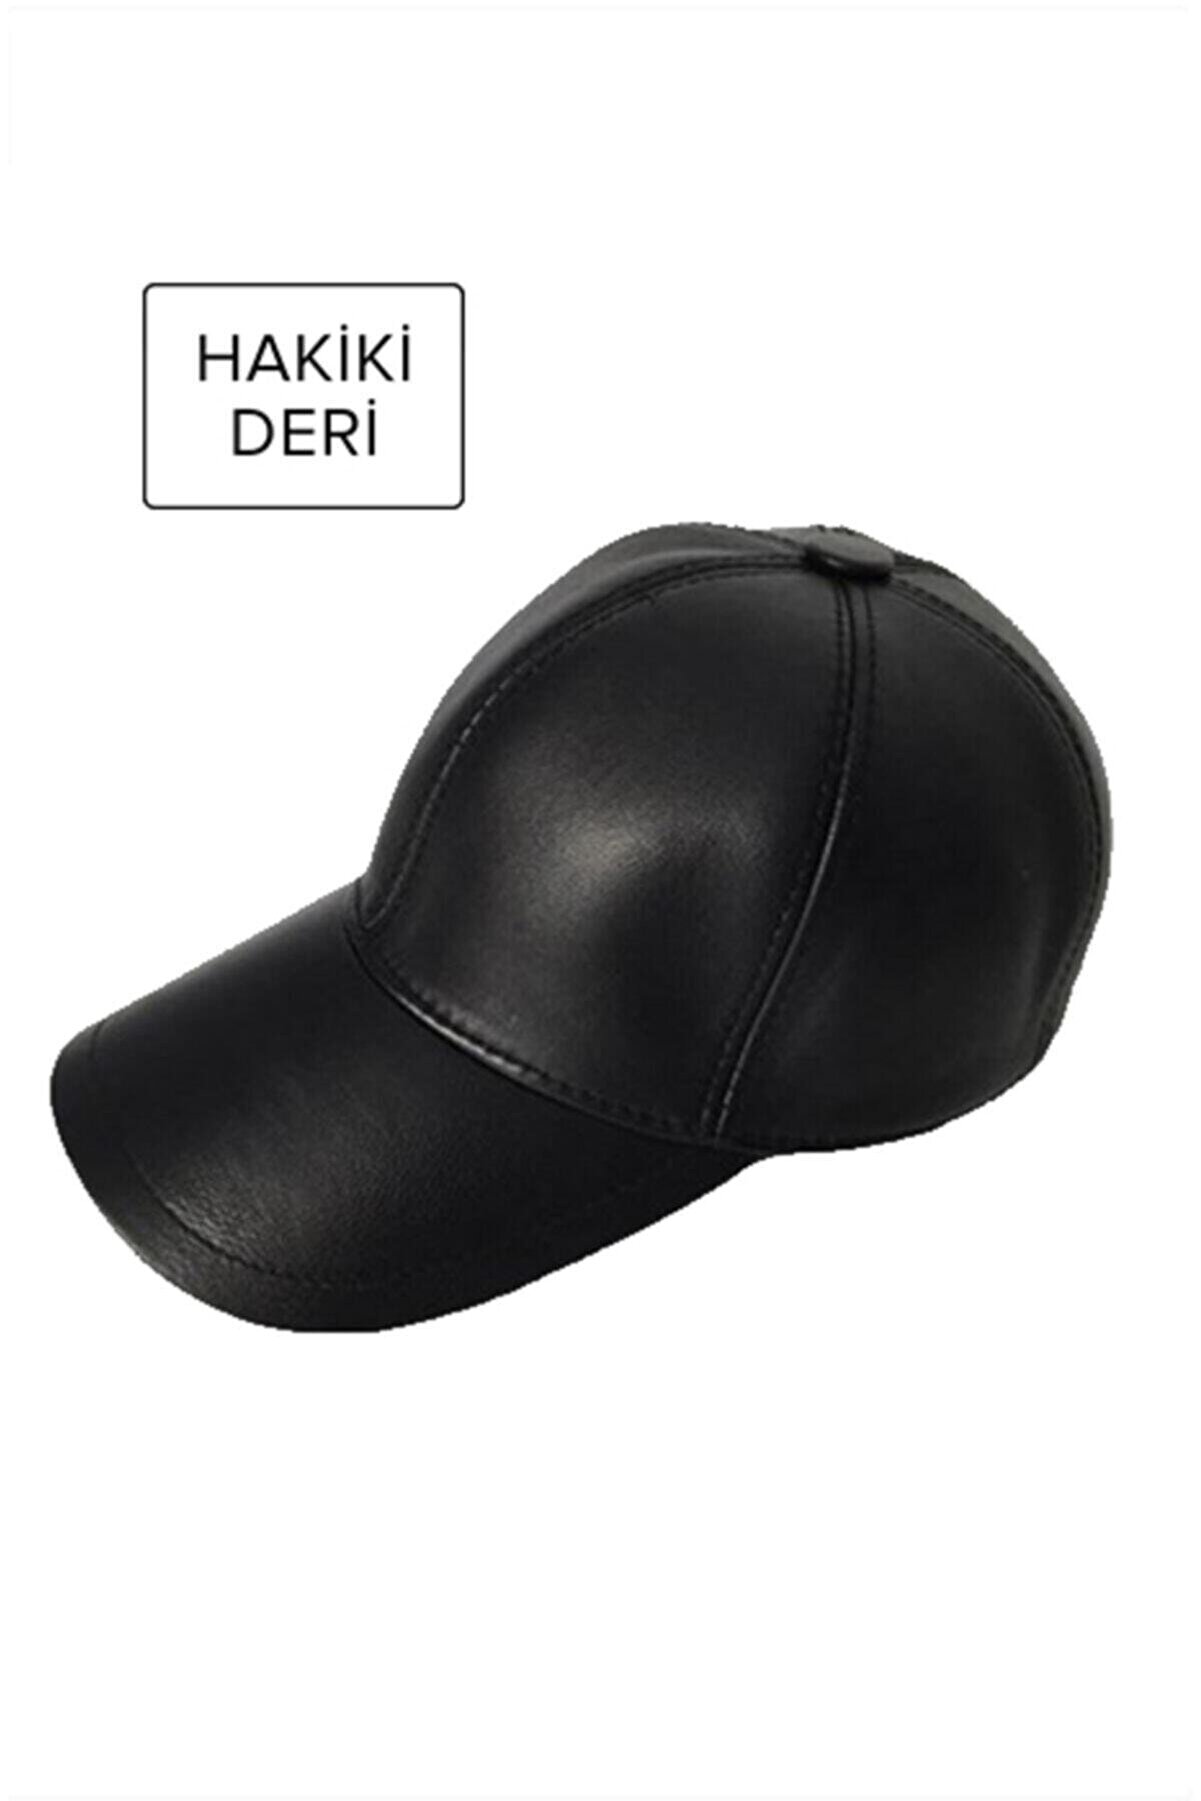 TULEİ Hakiki Deri Unisex Şapka